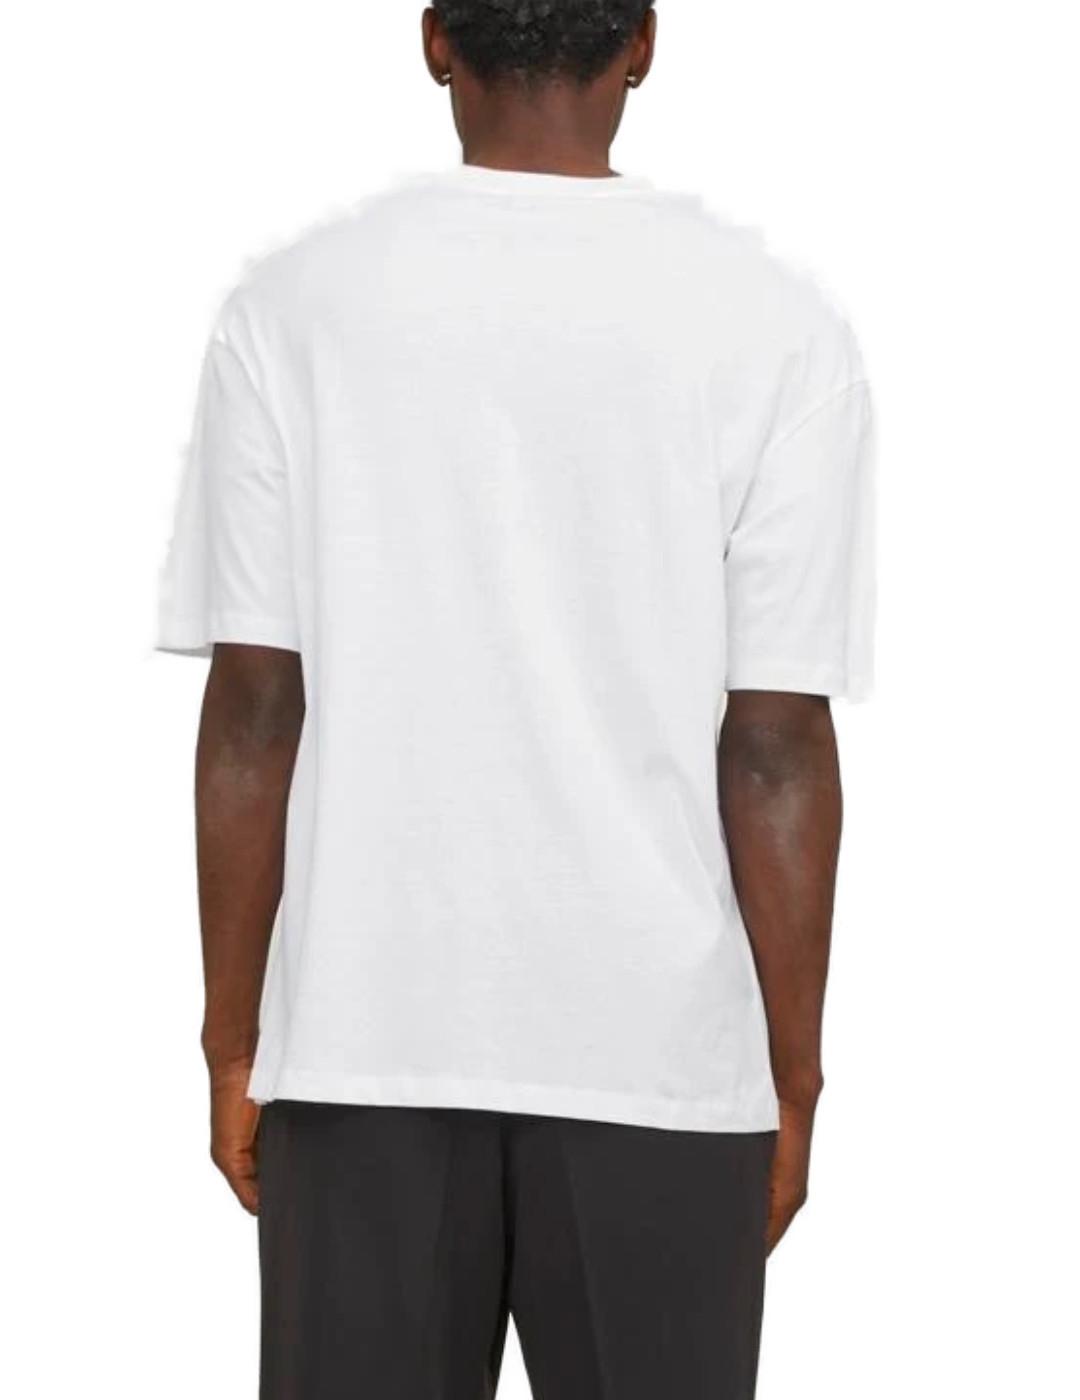 Camiseta Jack&Jones Bradley blanca básica manga corta hombre